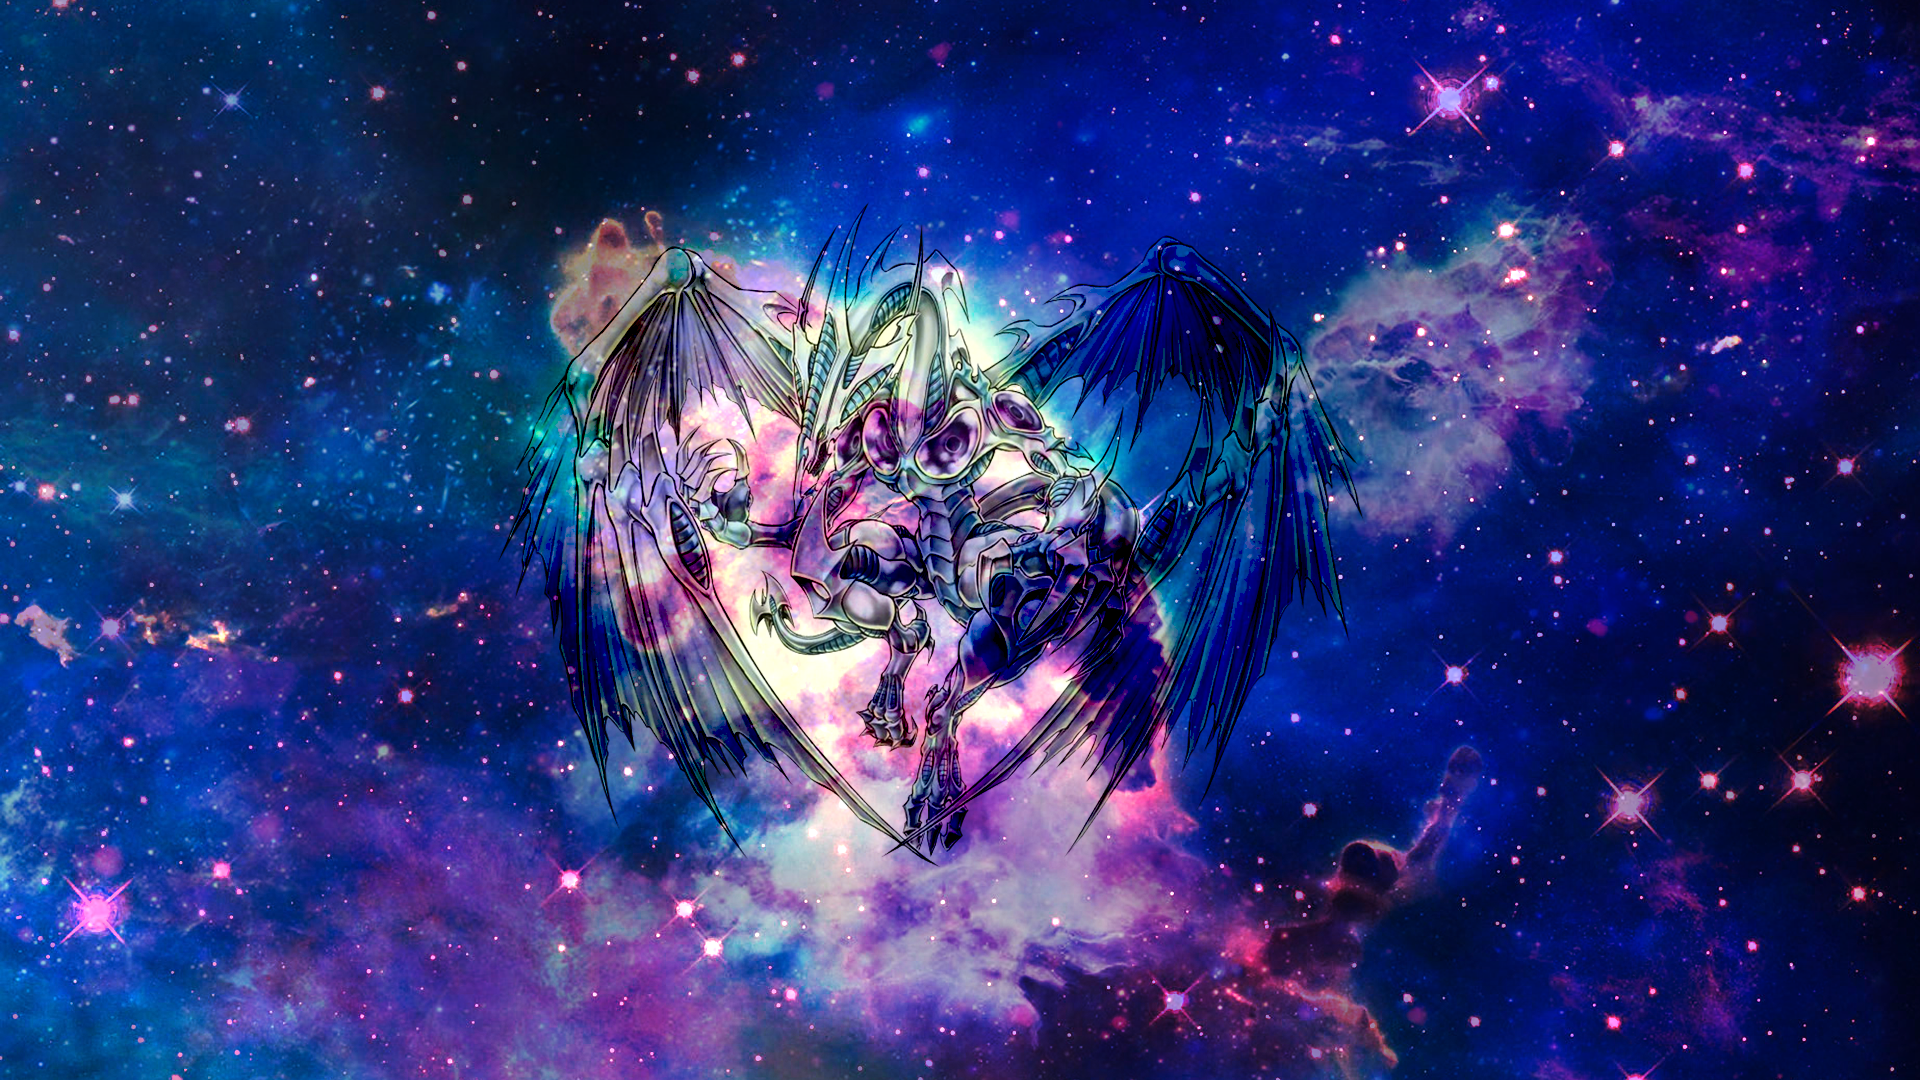 Stardust Dragon Wallpaper by ChopperExtra on DeviantArt